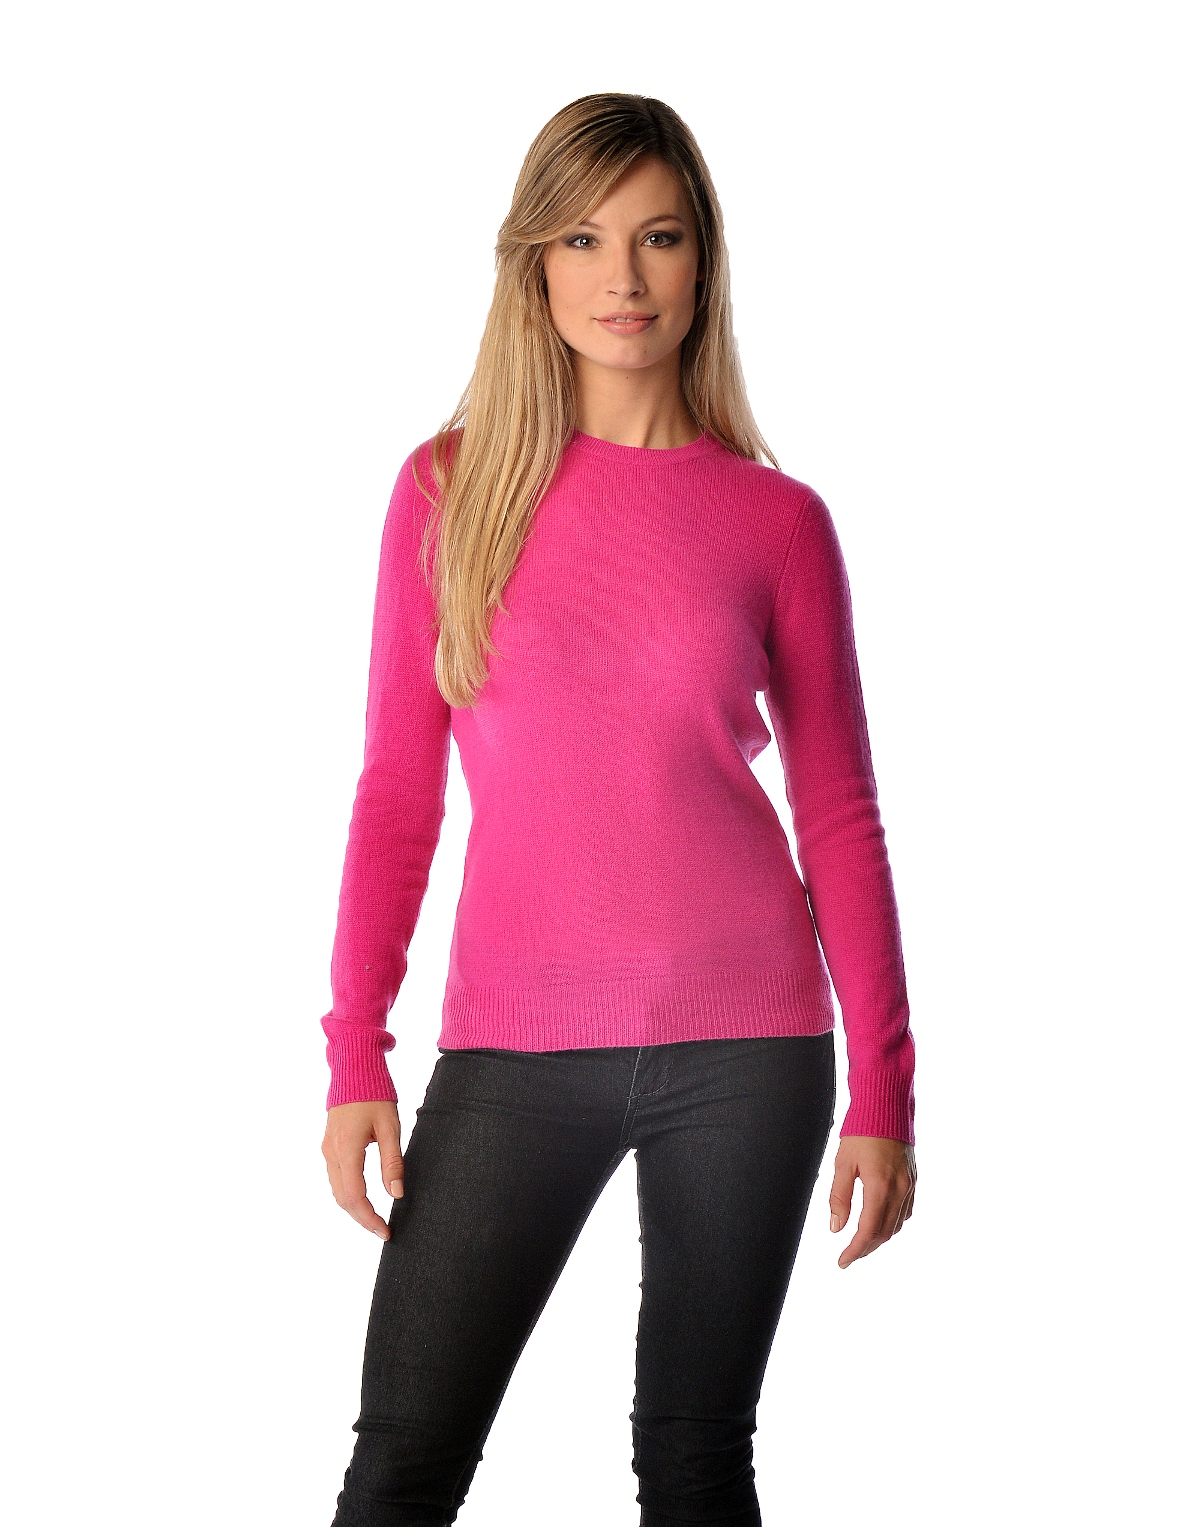 Pure Cashmere Crew Neck Spring Sweater for Women (Magenta Pink, Medium)